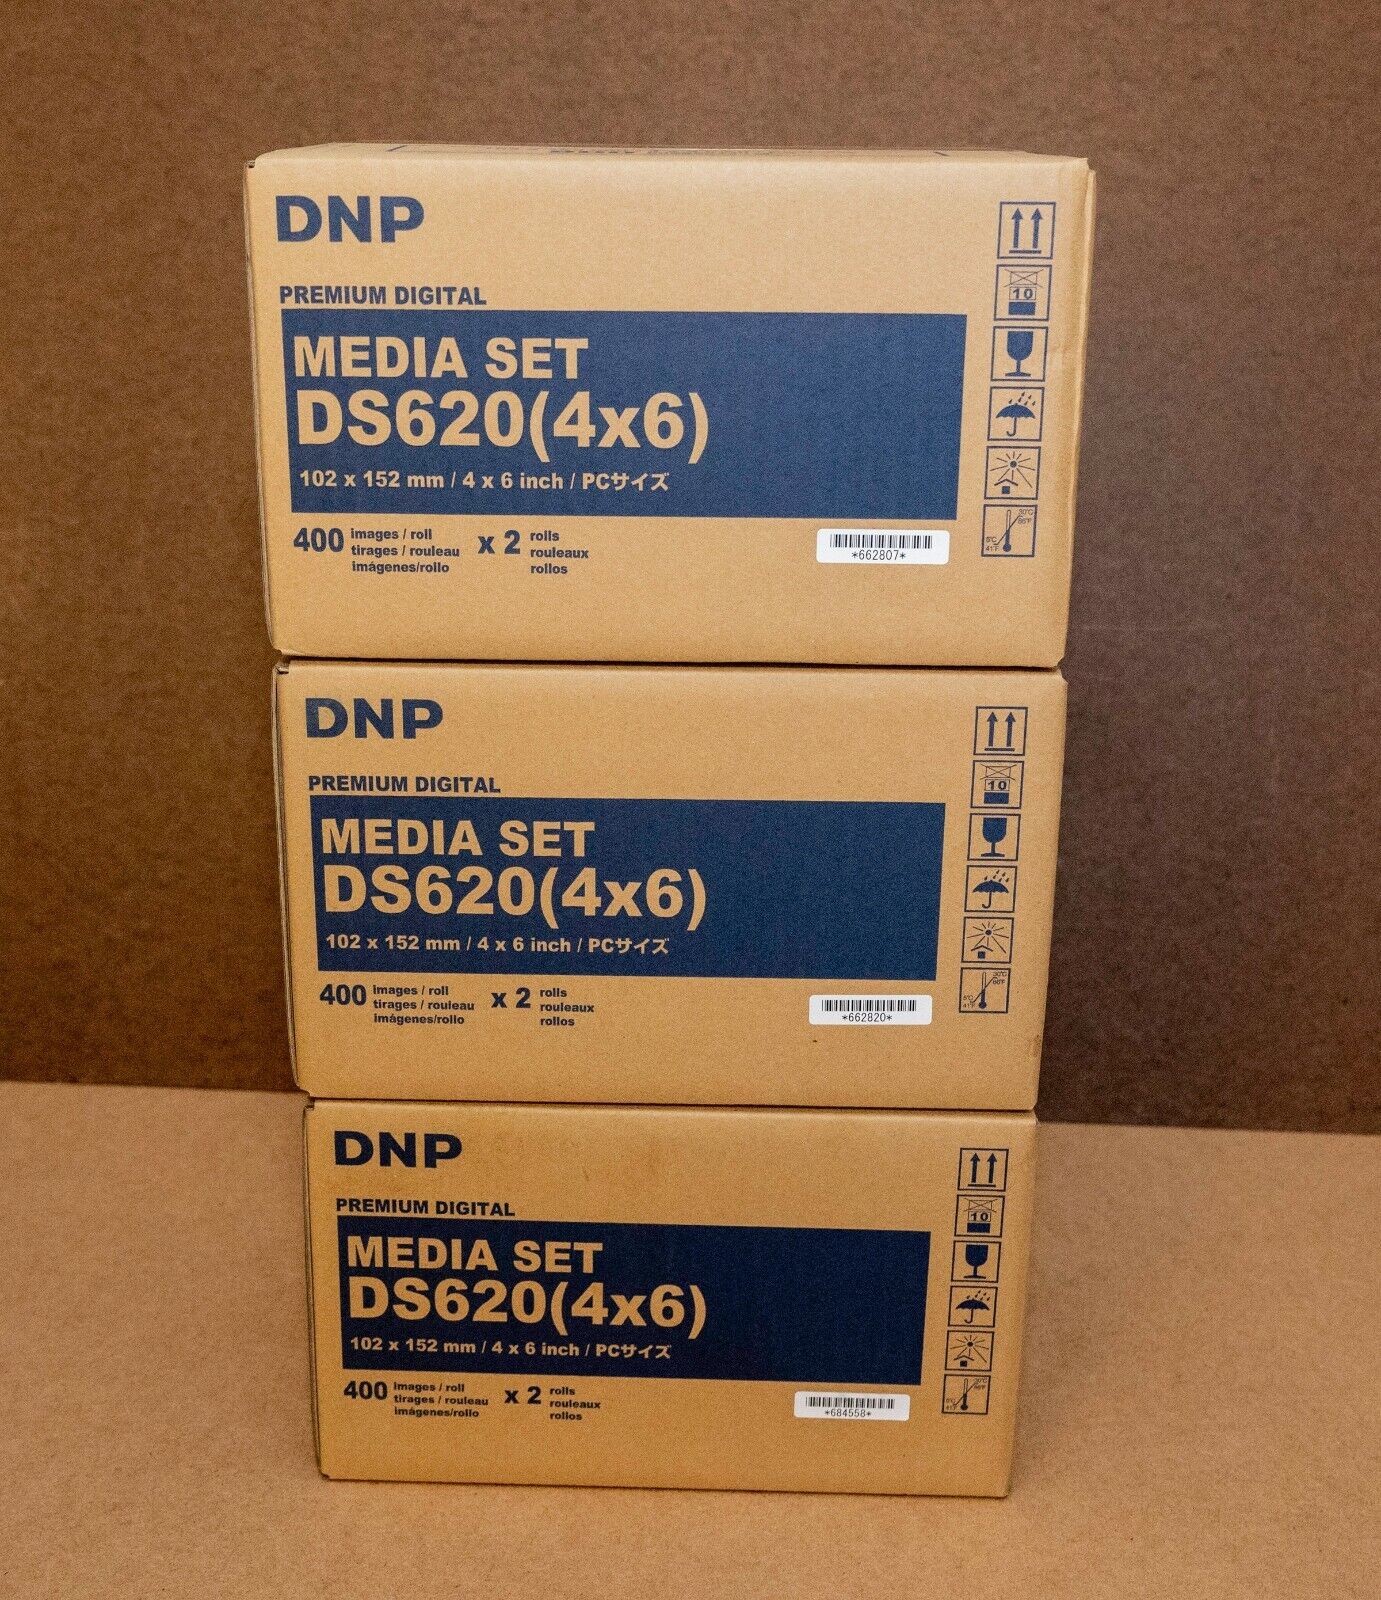 DNP DS620A4x6 4x6 Roll Media set - 3 Box Total prints 2400 - Paper & Ribbon Kit